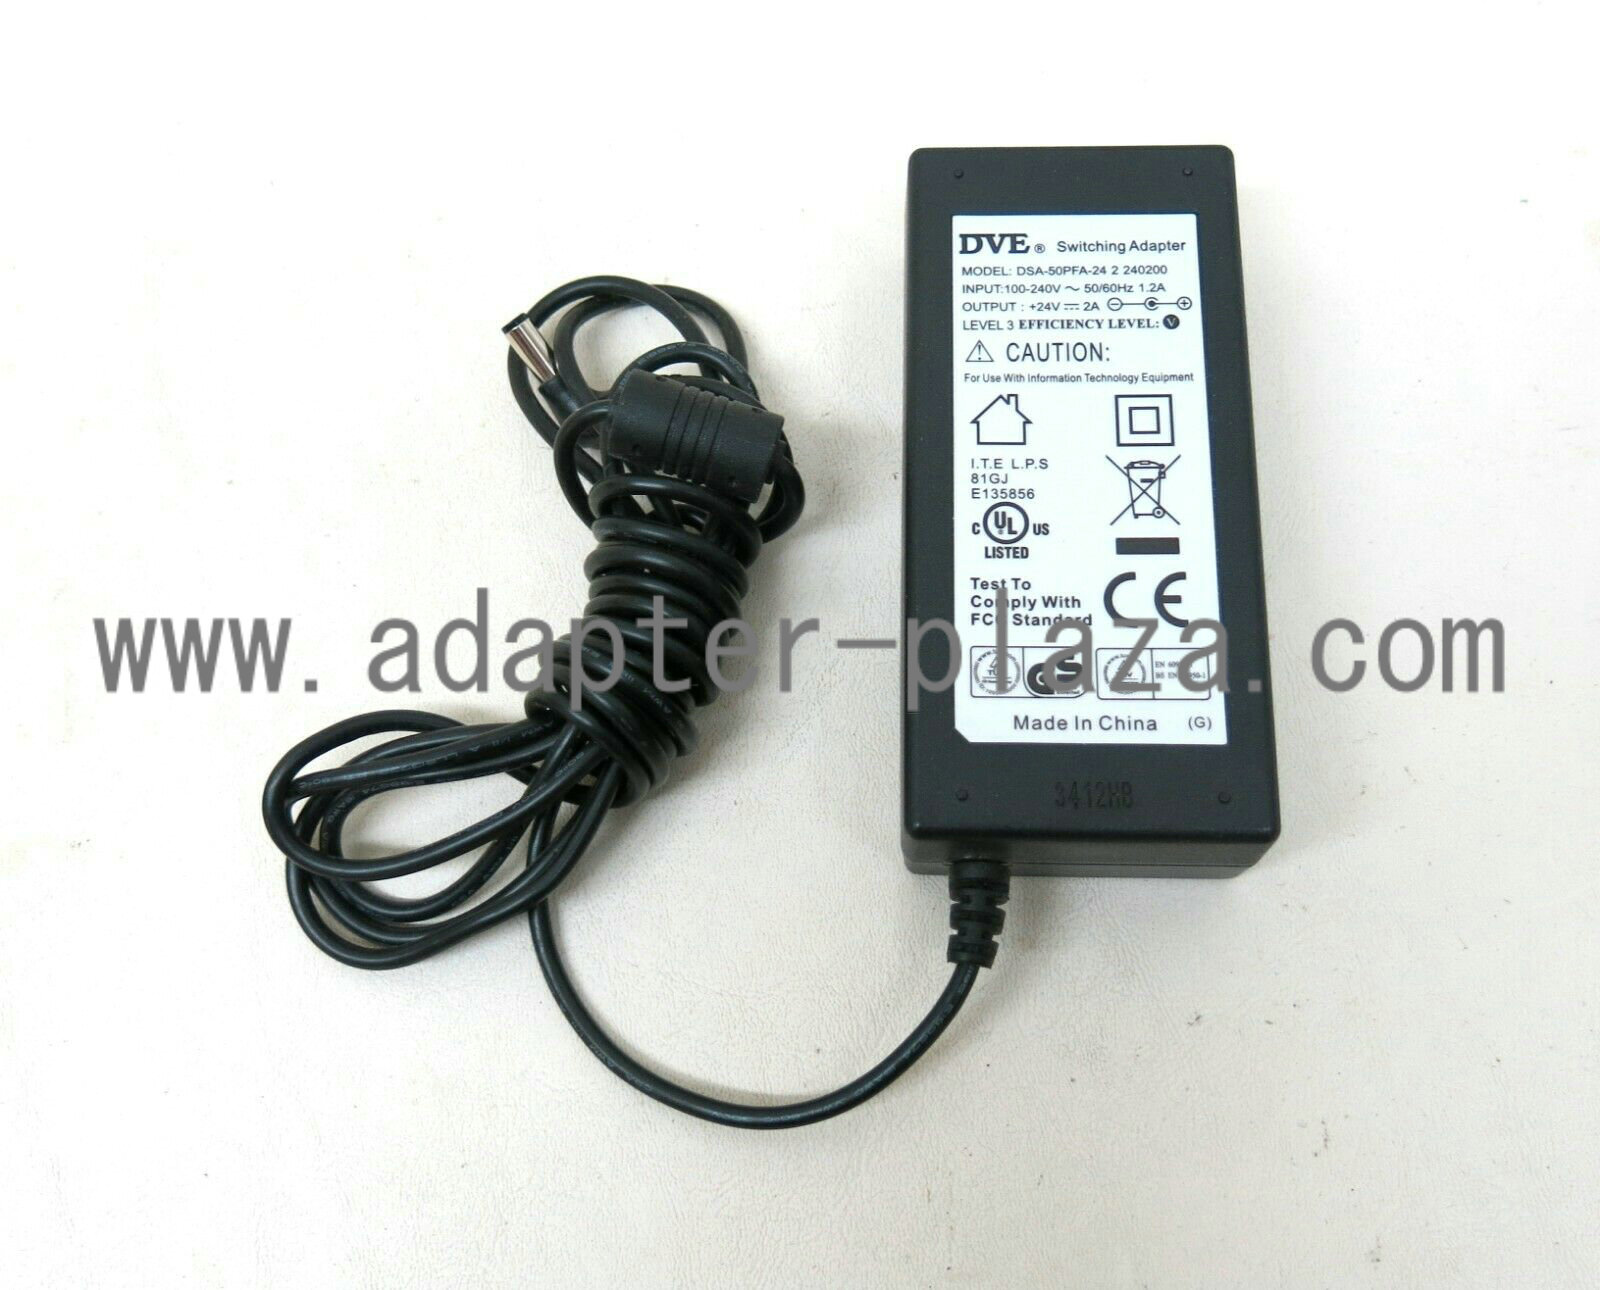 Genuine DVE DSA-50PFA-24 2 240200 Power Supply 24V 2A Authentic ac adapter